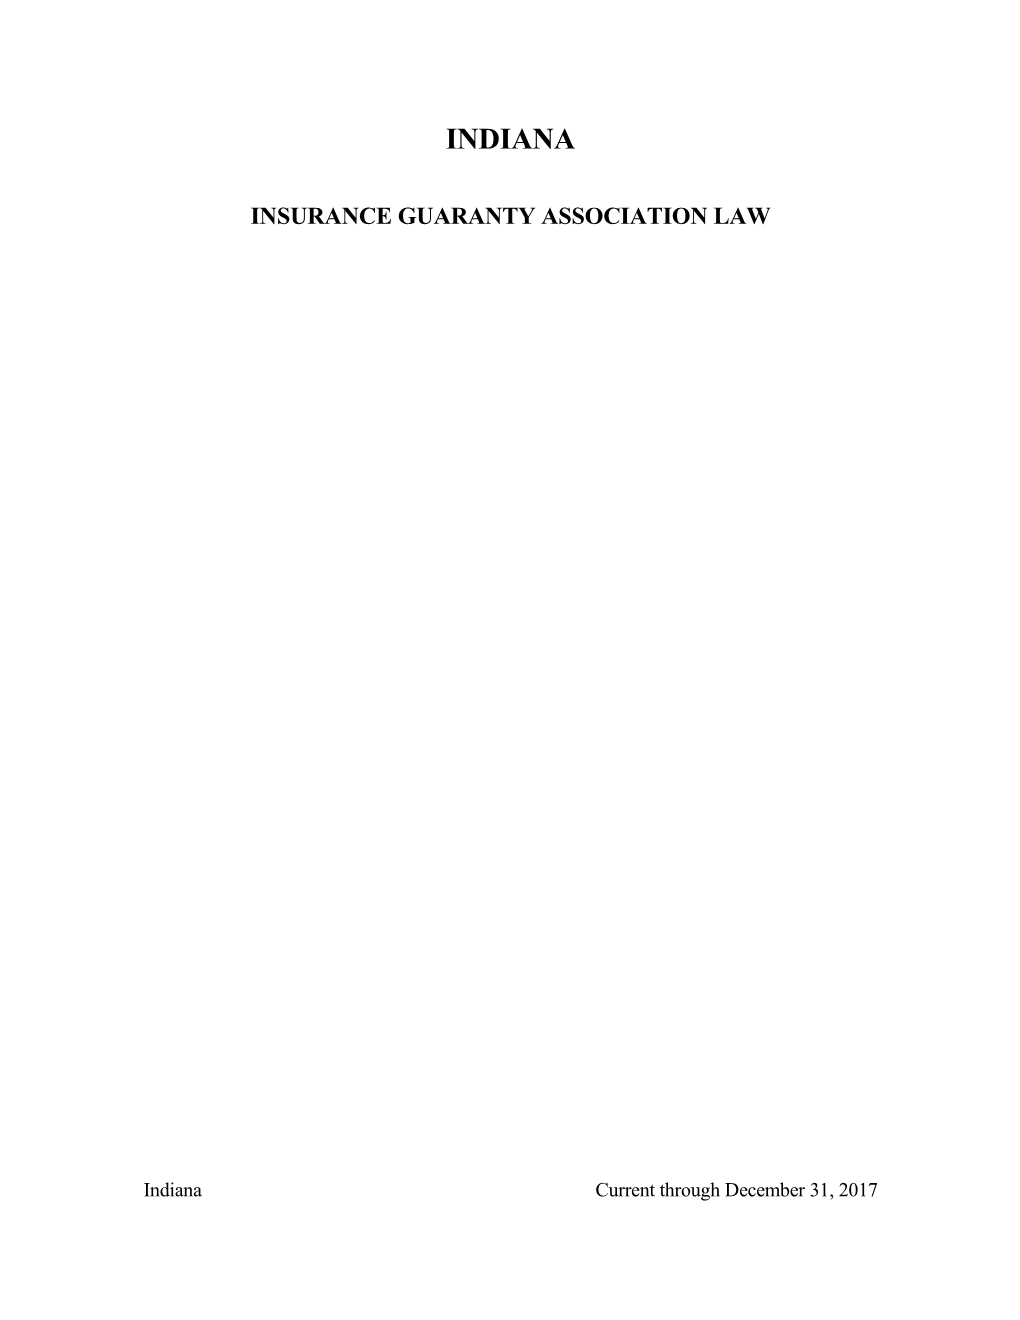 Insurance Guaranty Association Law